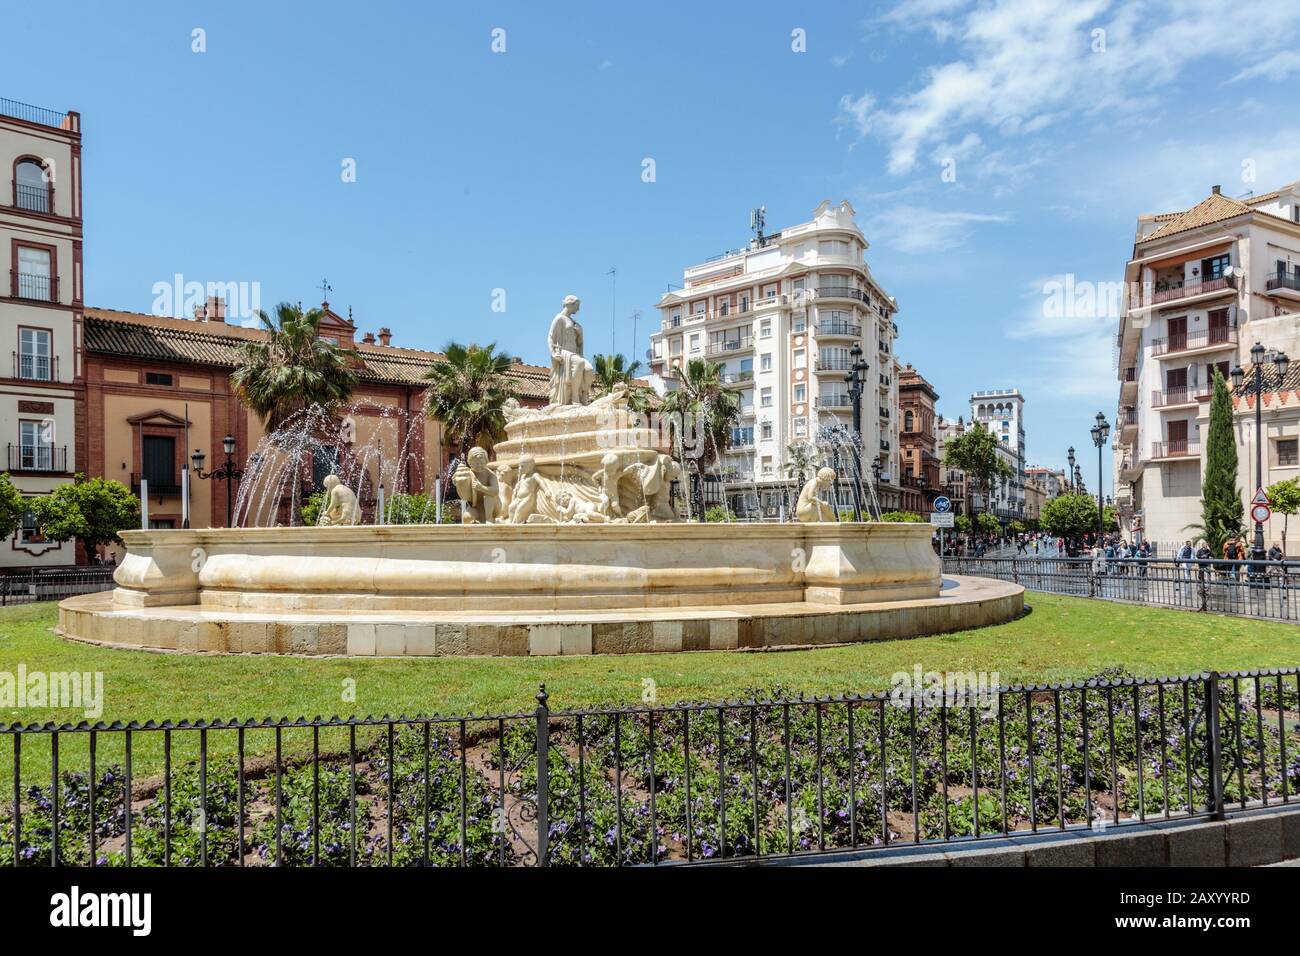 The water Fountain of Hispalis with nereid sea nymphs close to Puerta de Jerez ( Jerez Gate) in Seville,  Spain Stock Photo